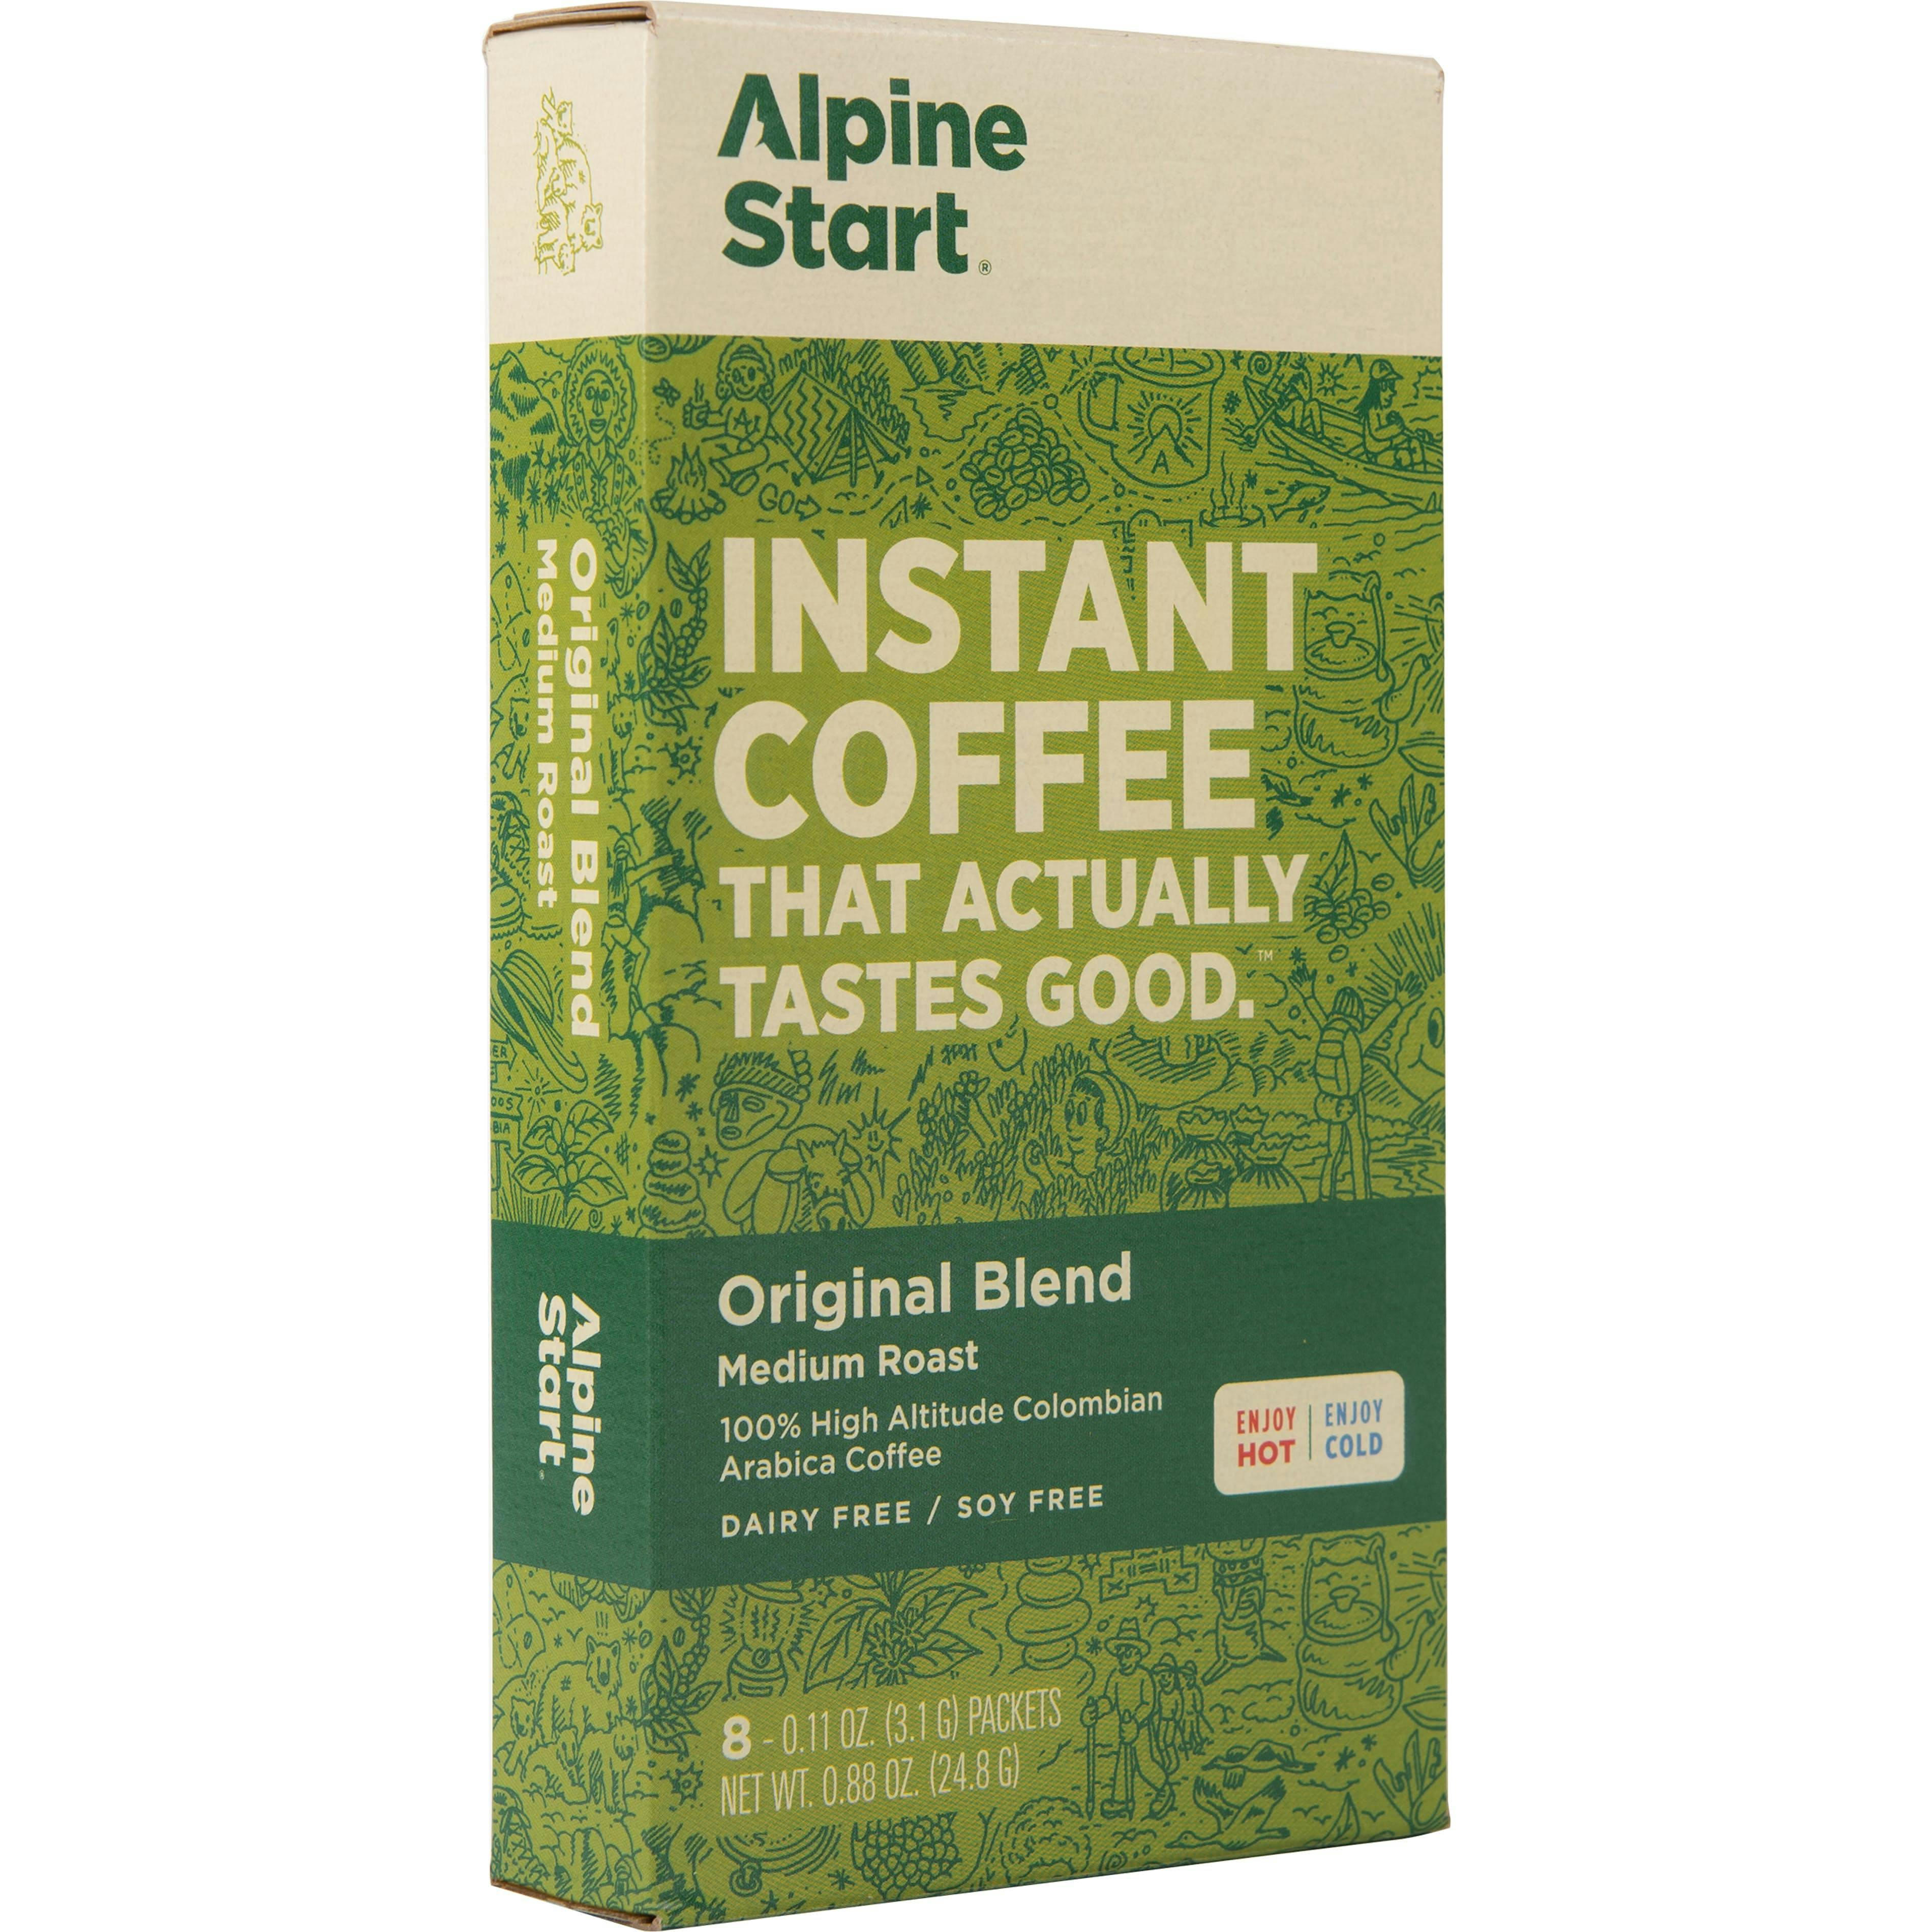 Alpine Start instant coffee